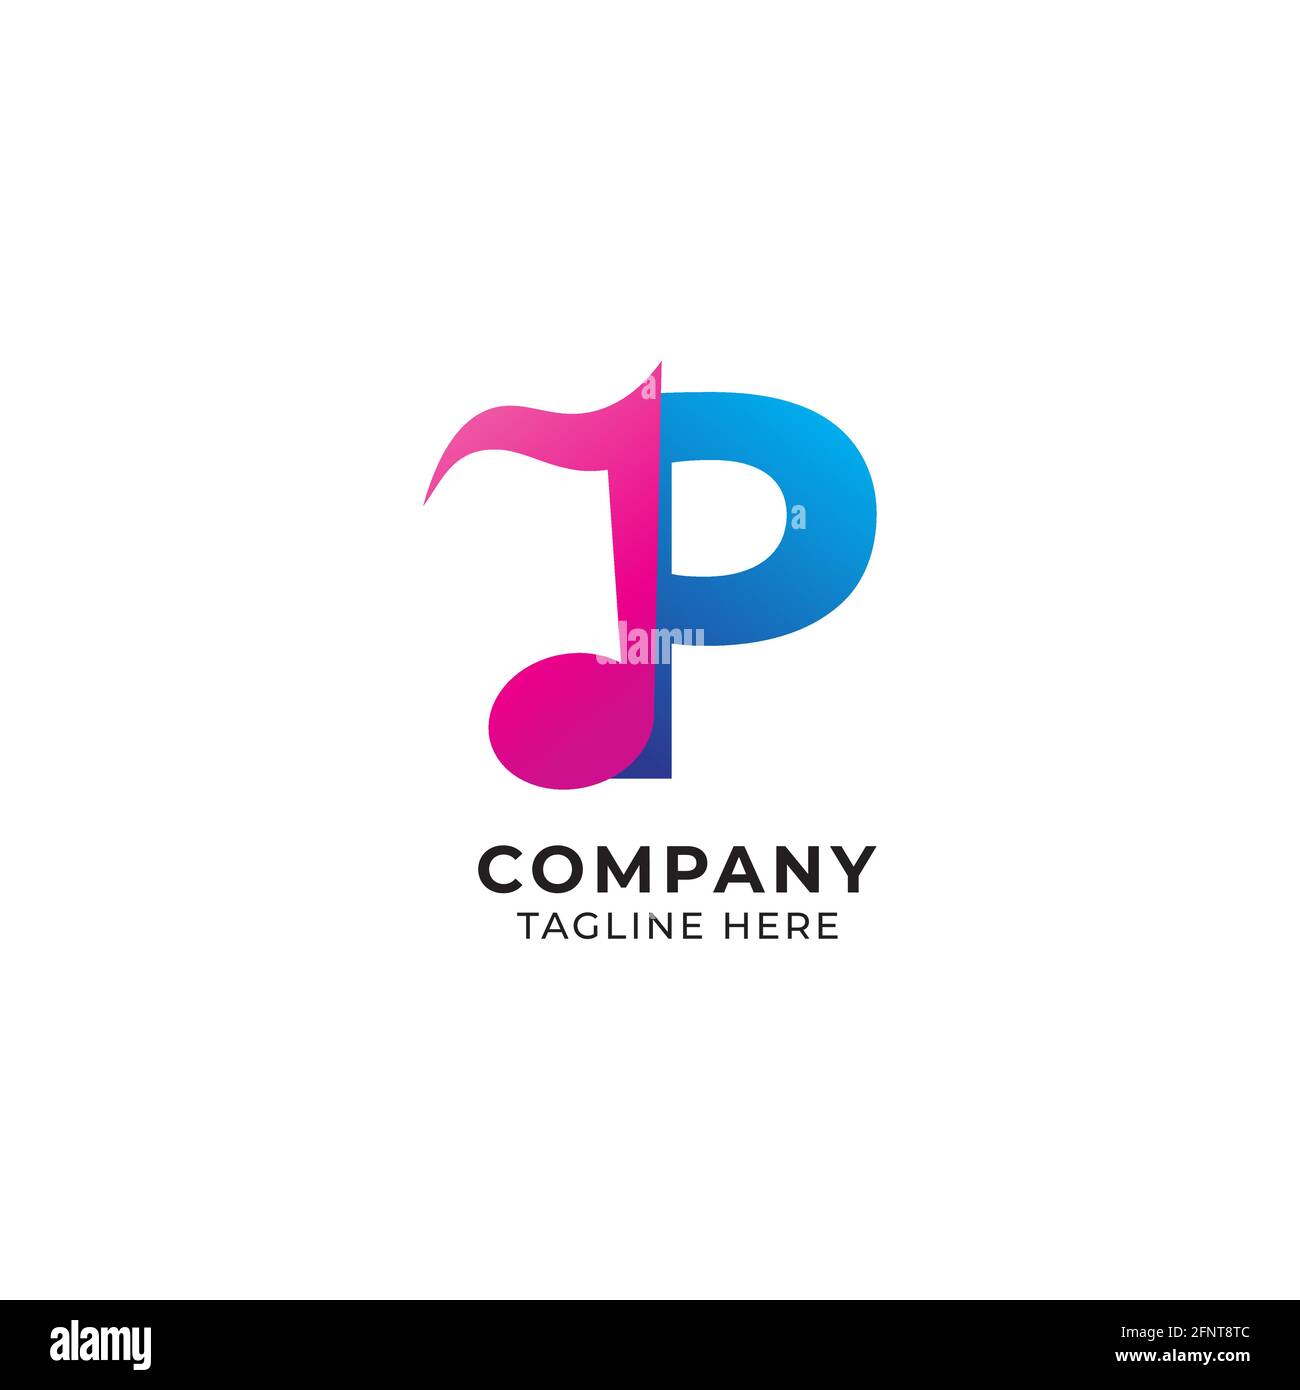 Colorful Letter P Alphabet Music Logo Design Isolated on White ...